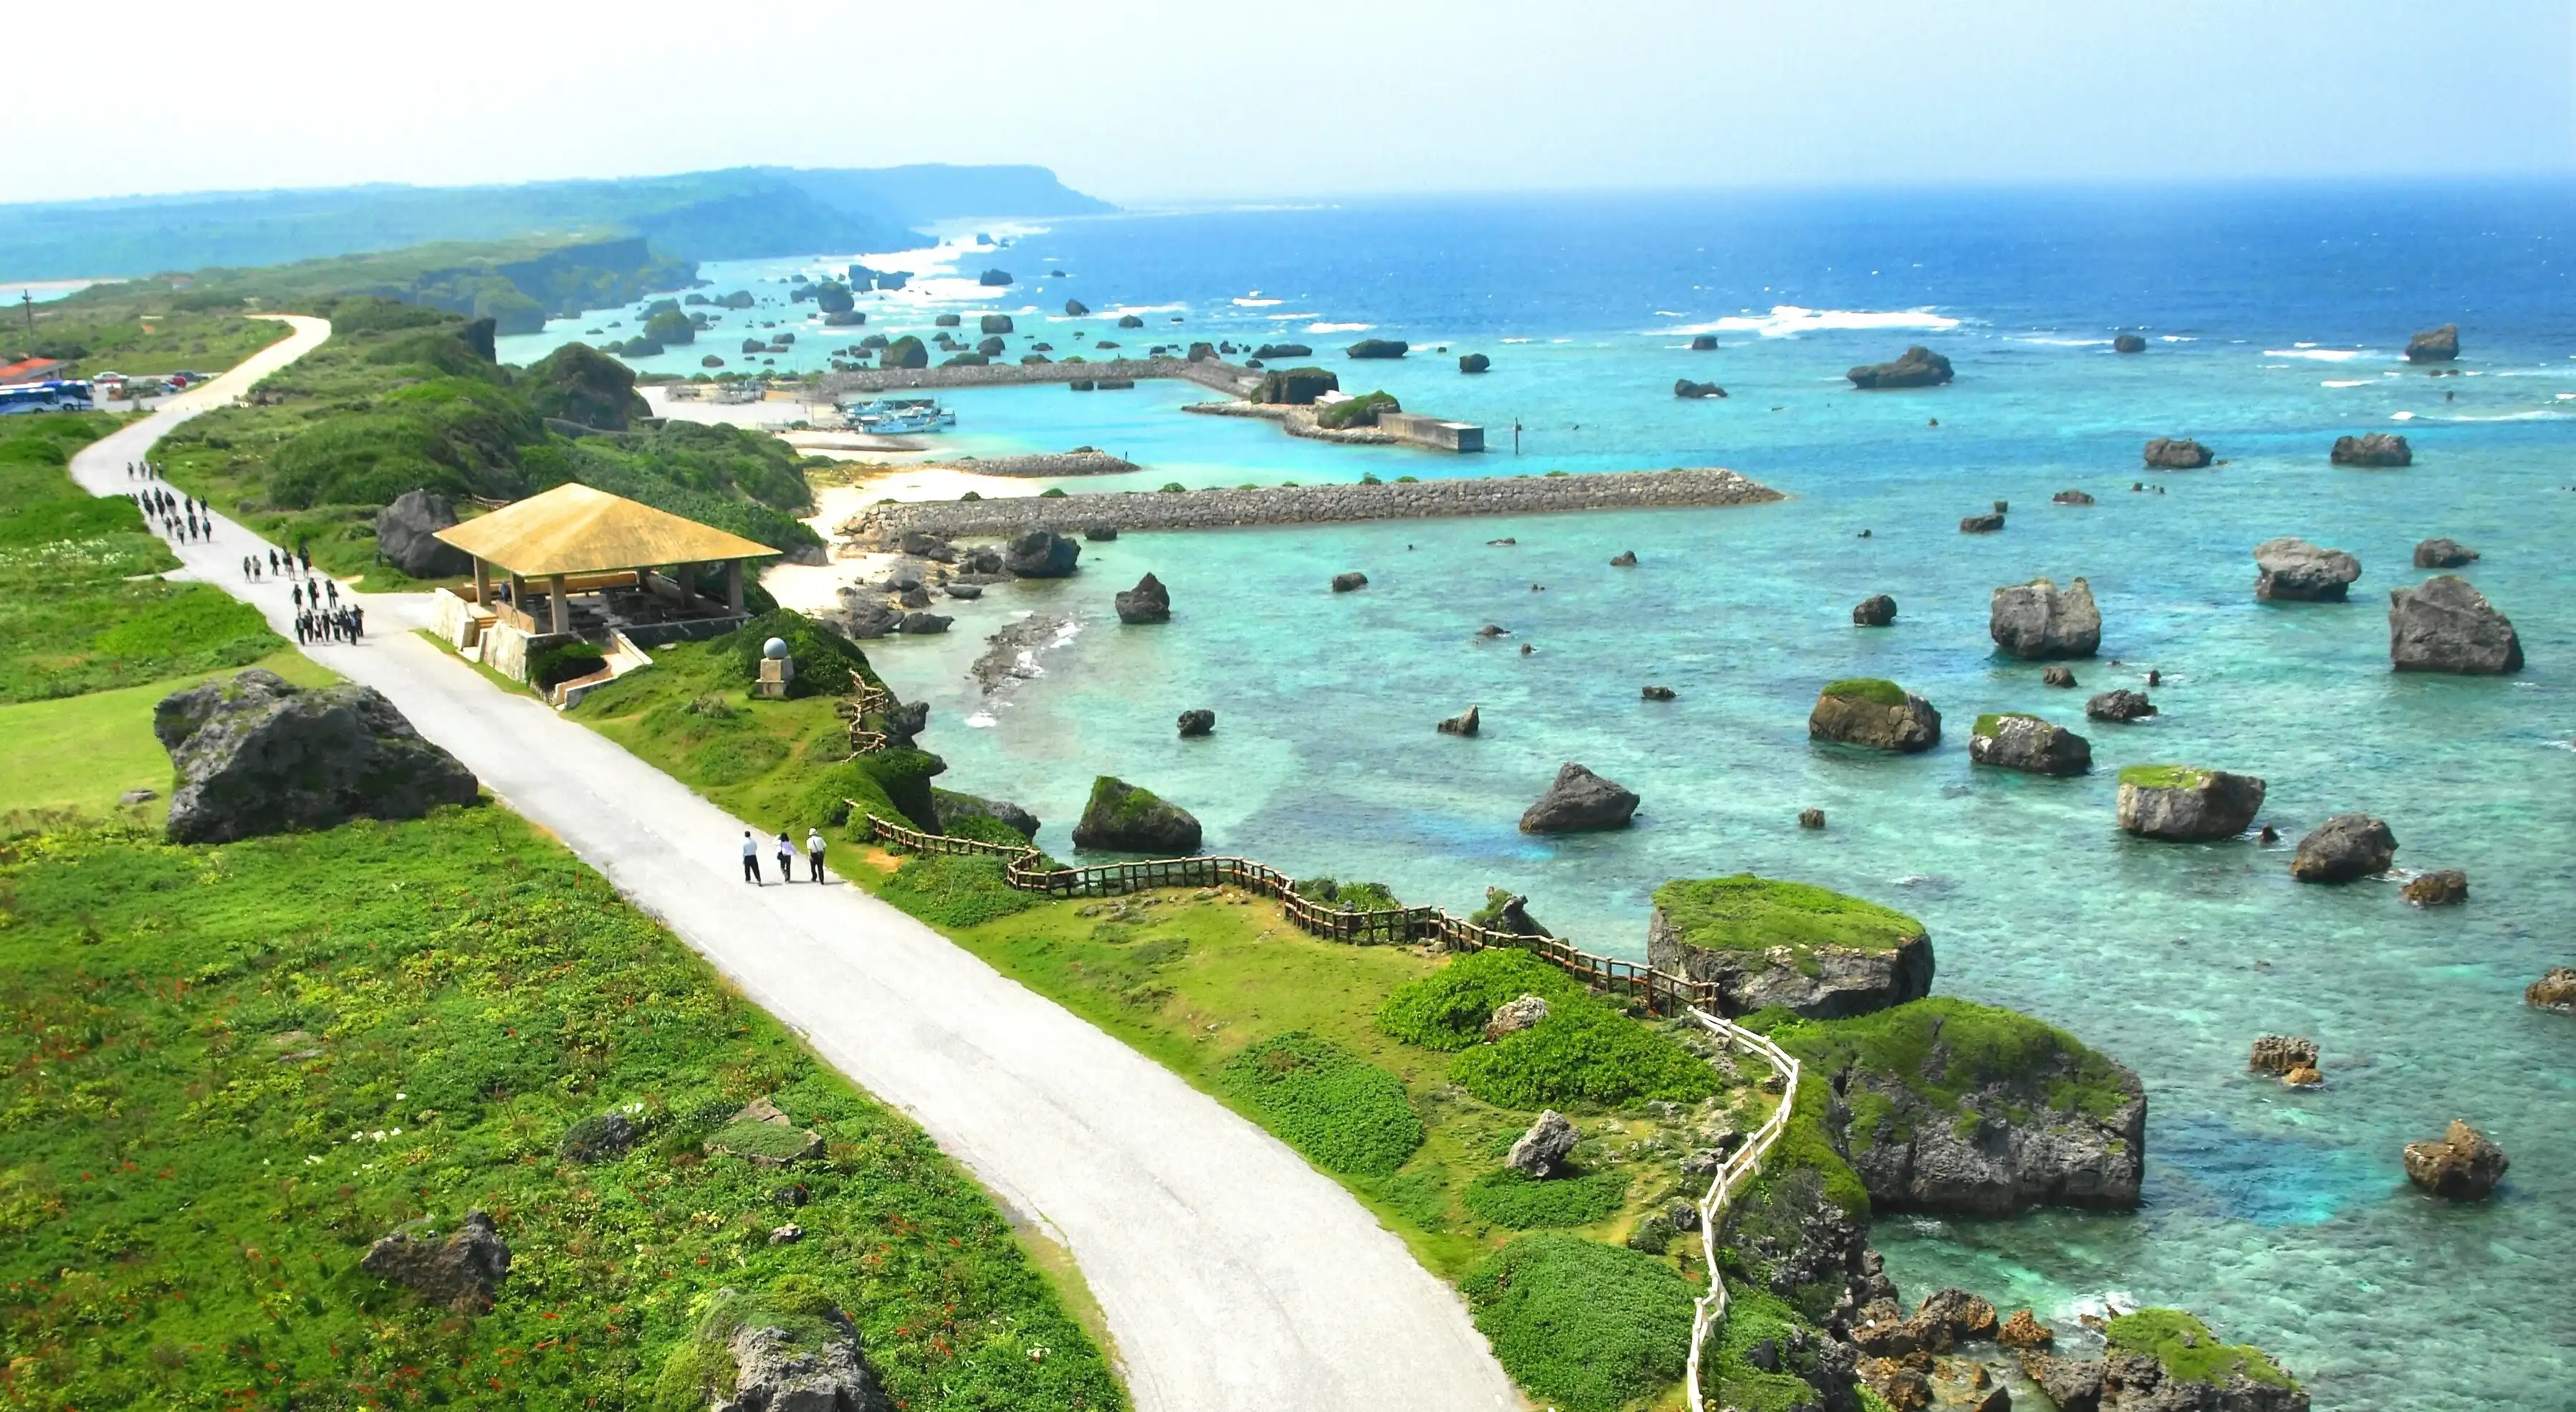 Miyakojima island in Okinawa Prefecture,Japan. "Higashi-hennazaki"